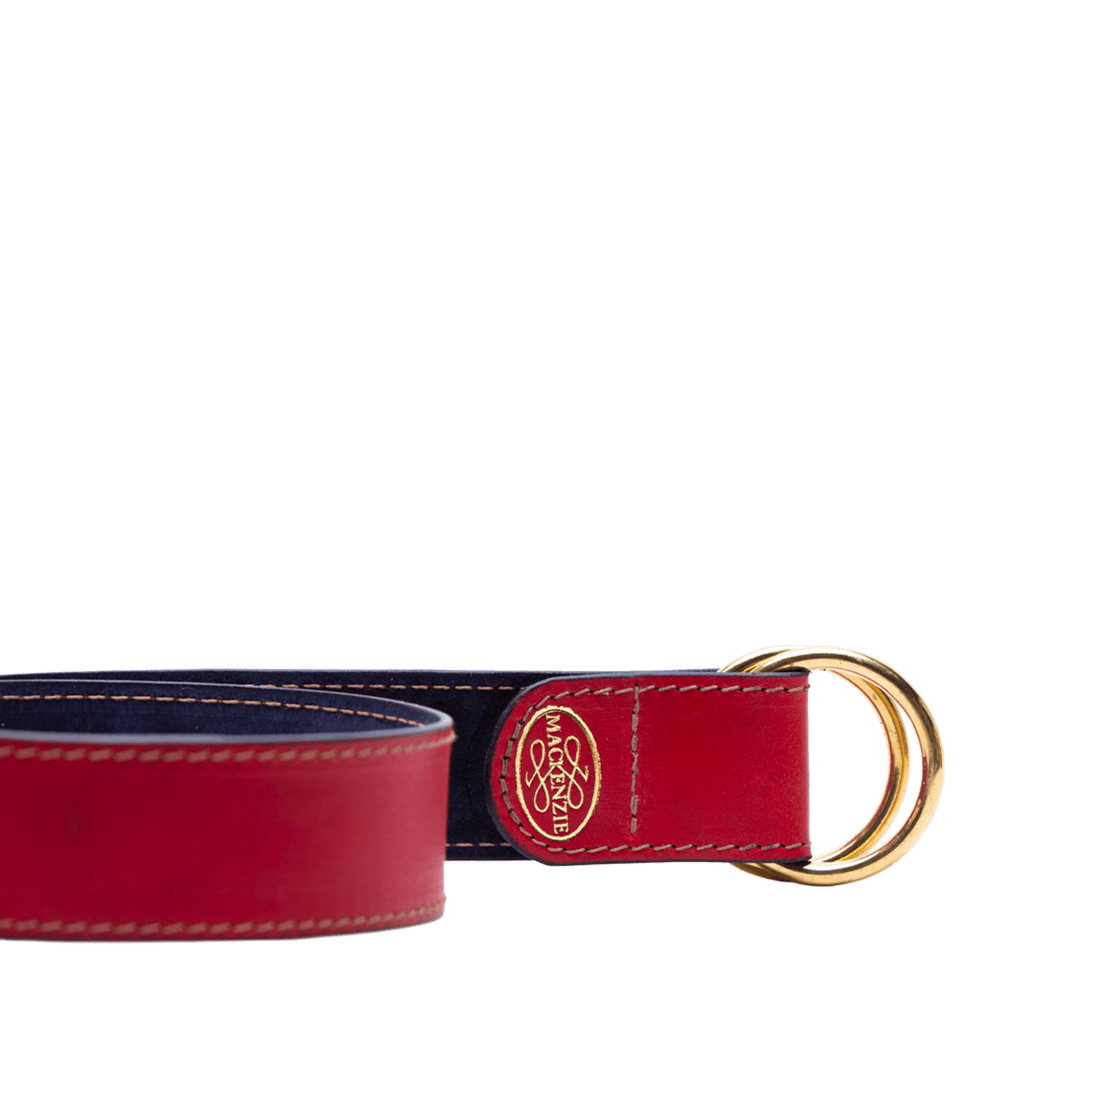 Women's leather belts in Italian soft hide matt red colour, handmade by Mackenzie Leather Edinburgh.